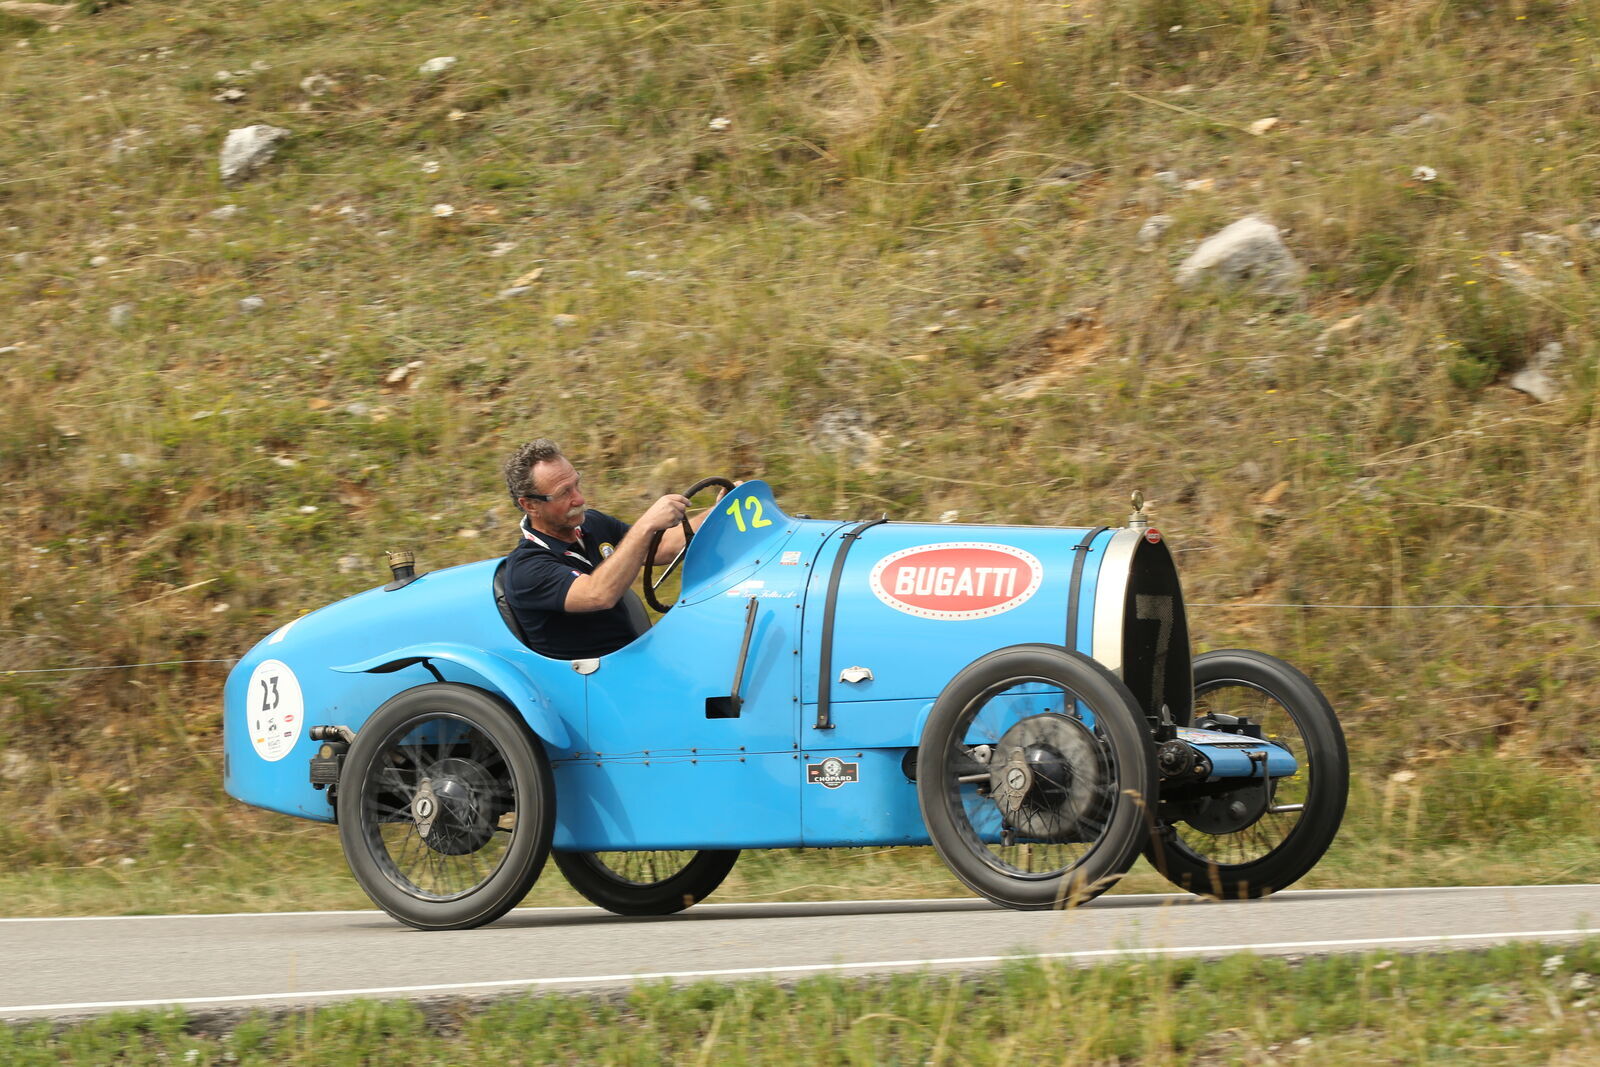 Bugatti kỷ niệm 100 năm chiến thắng của Type 13 Brescia-5